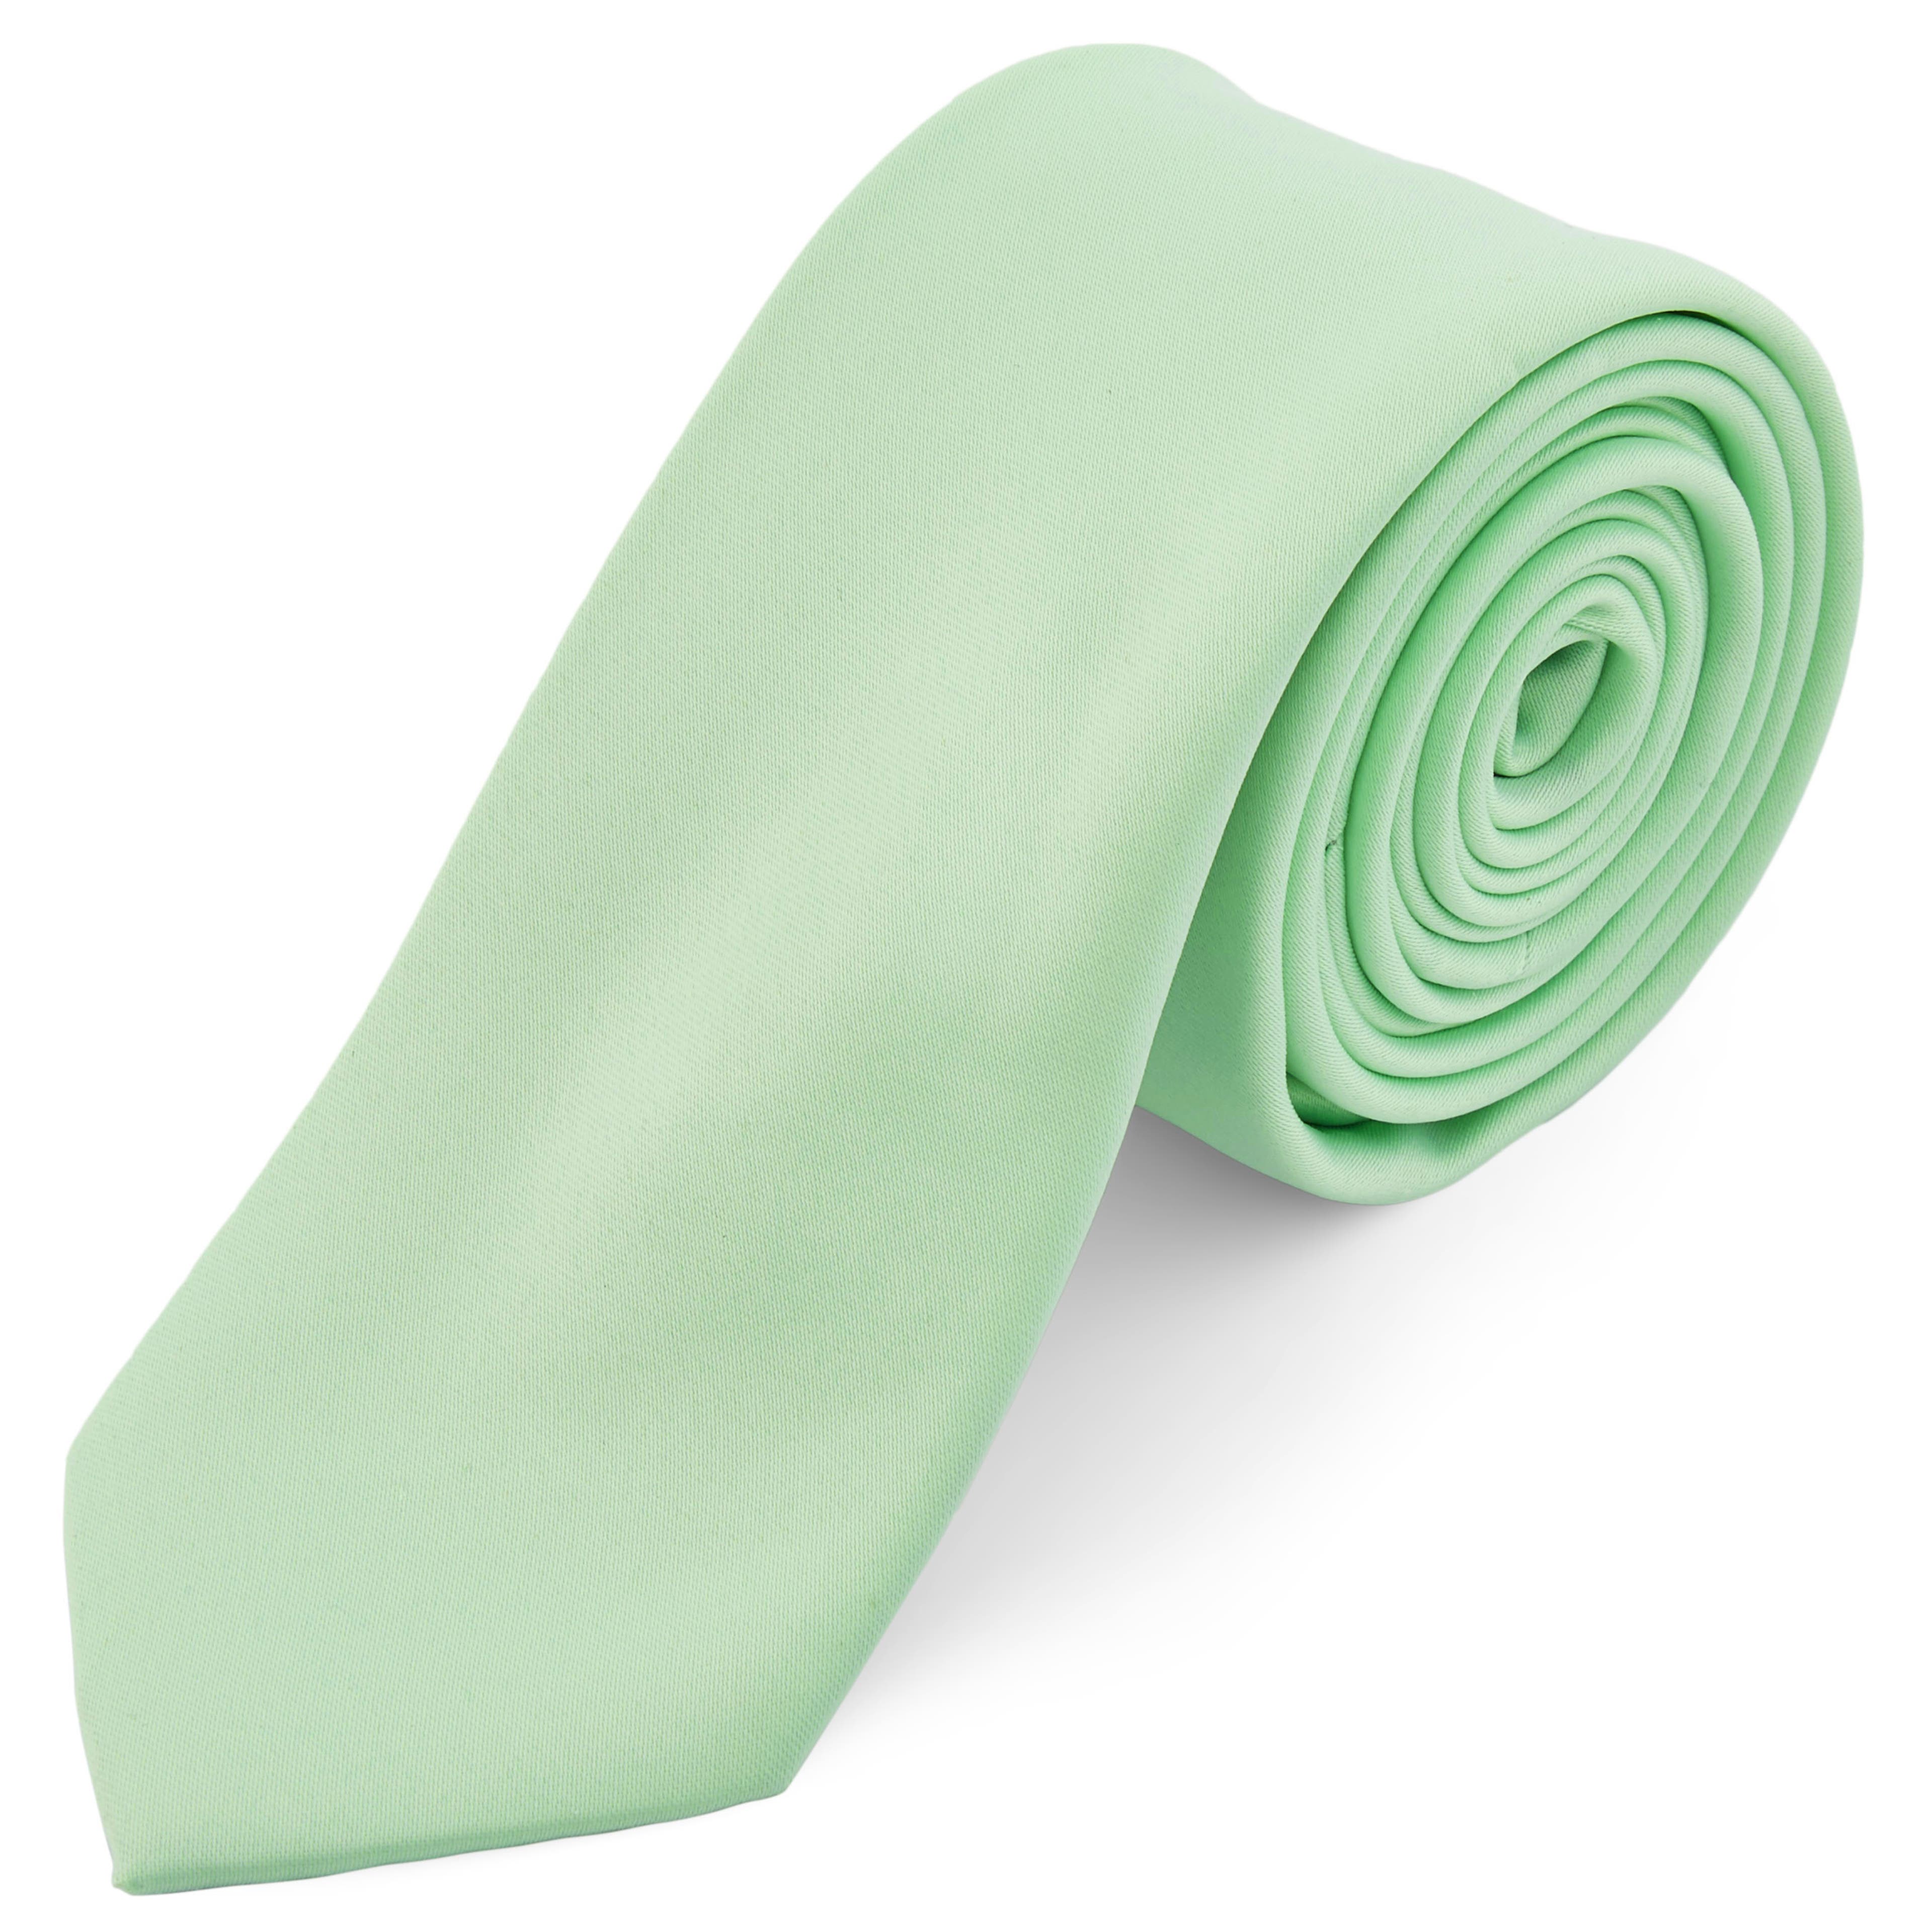 Mätovozelená 6 cm kravata Basic